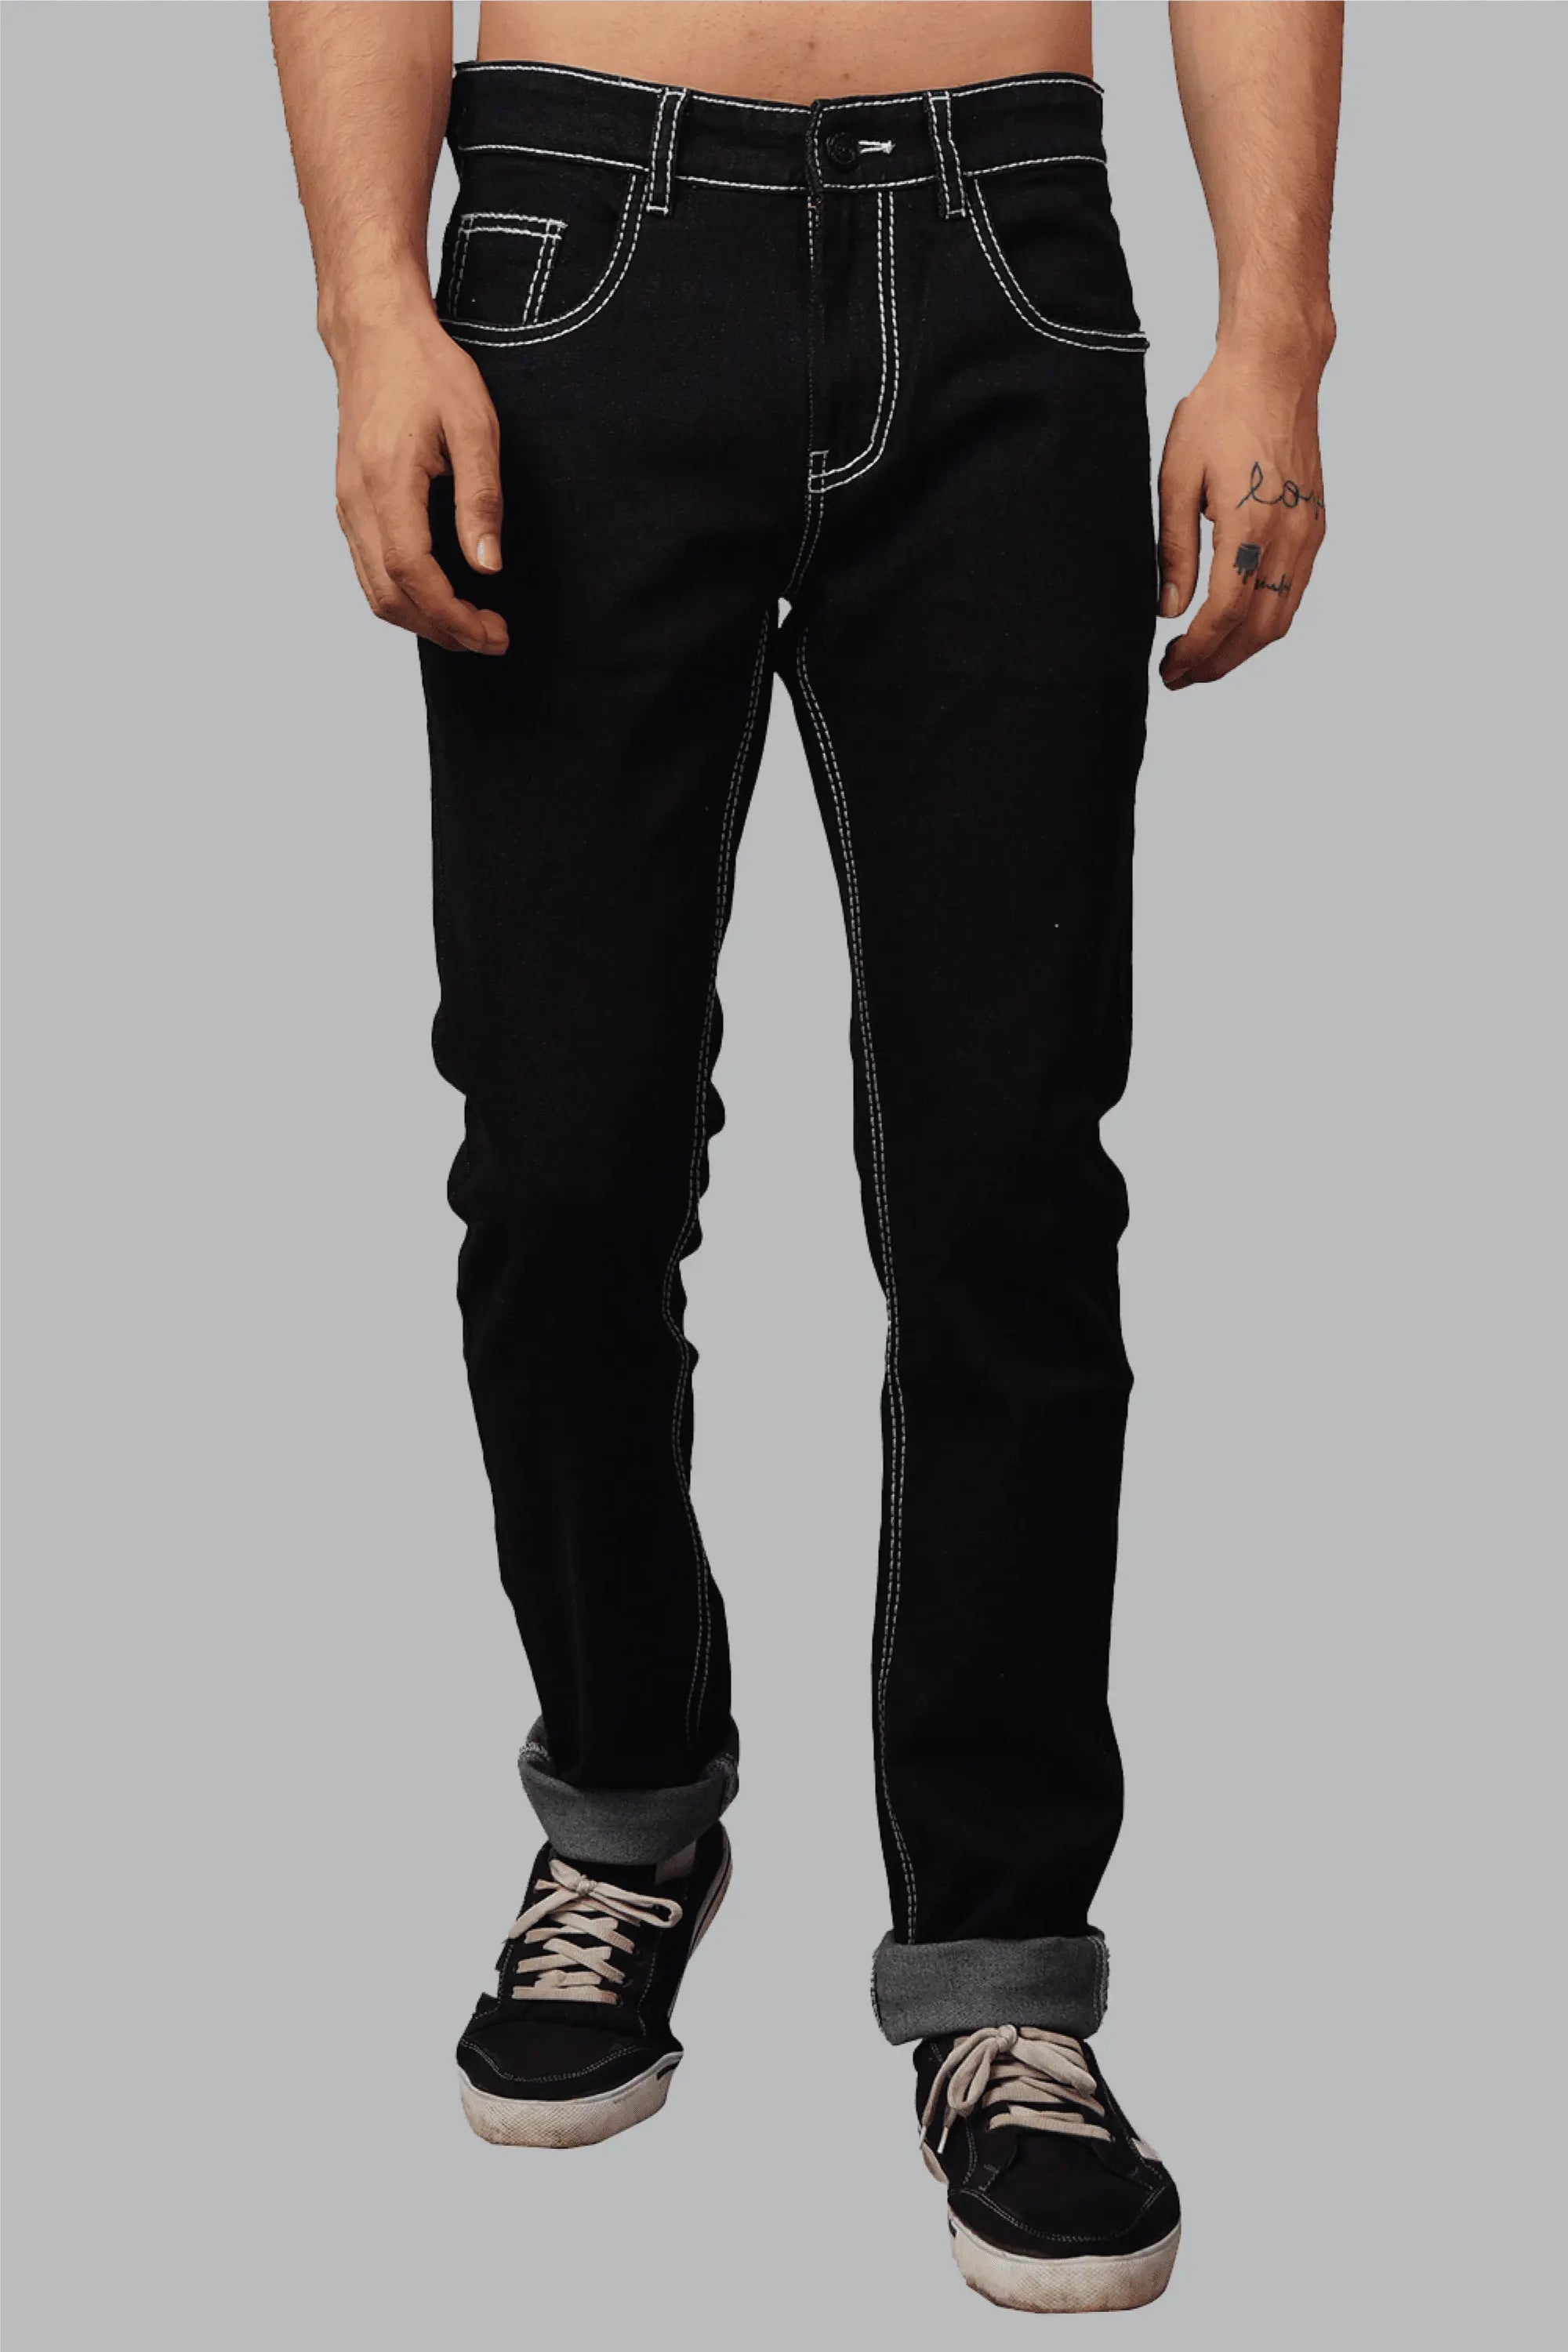 Buy U.S. Polo Assn. Denim Co. Slim Tapered Fit Black Jeans - NNNOW.com